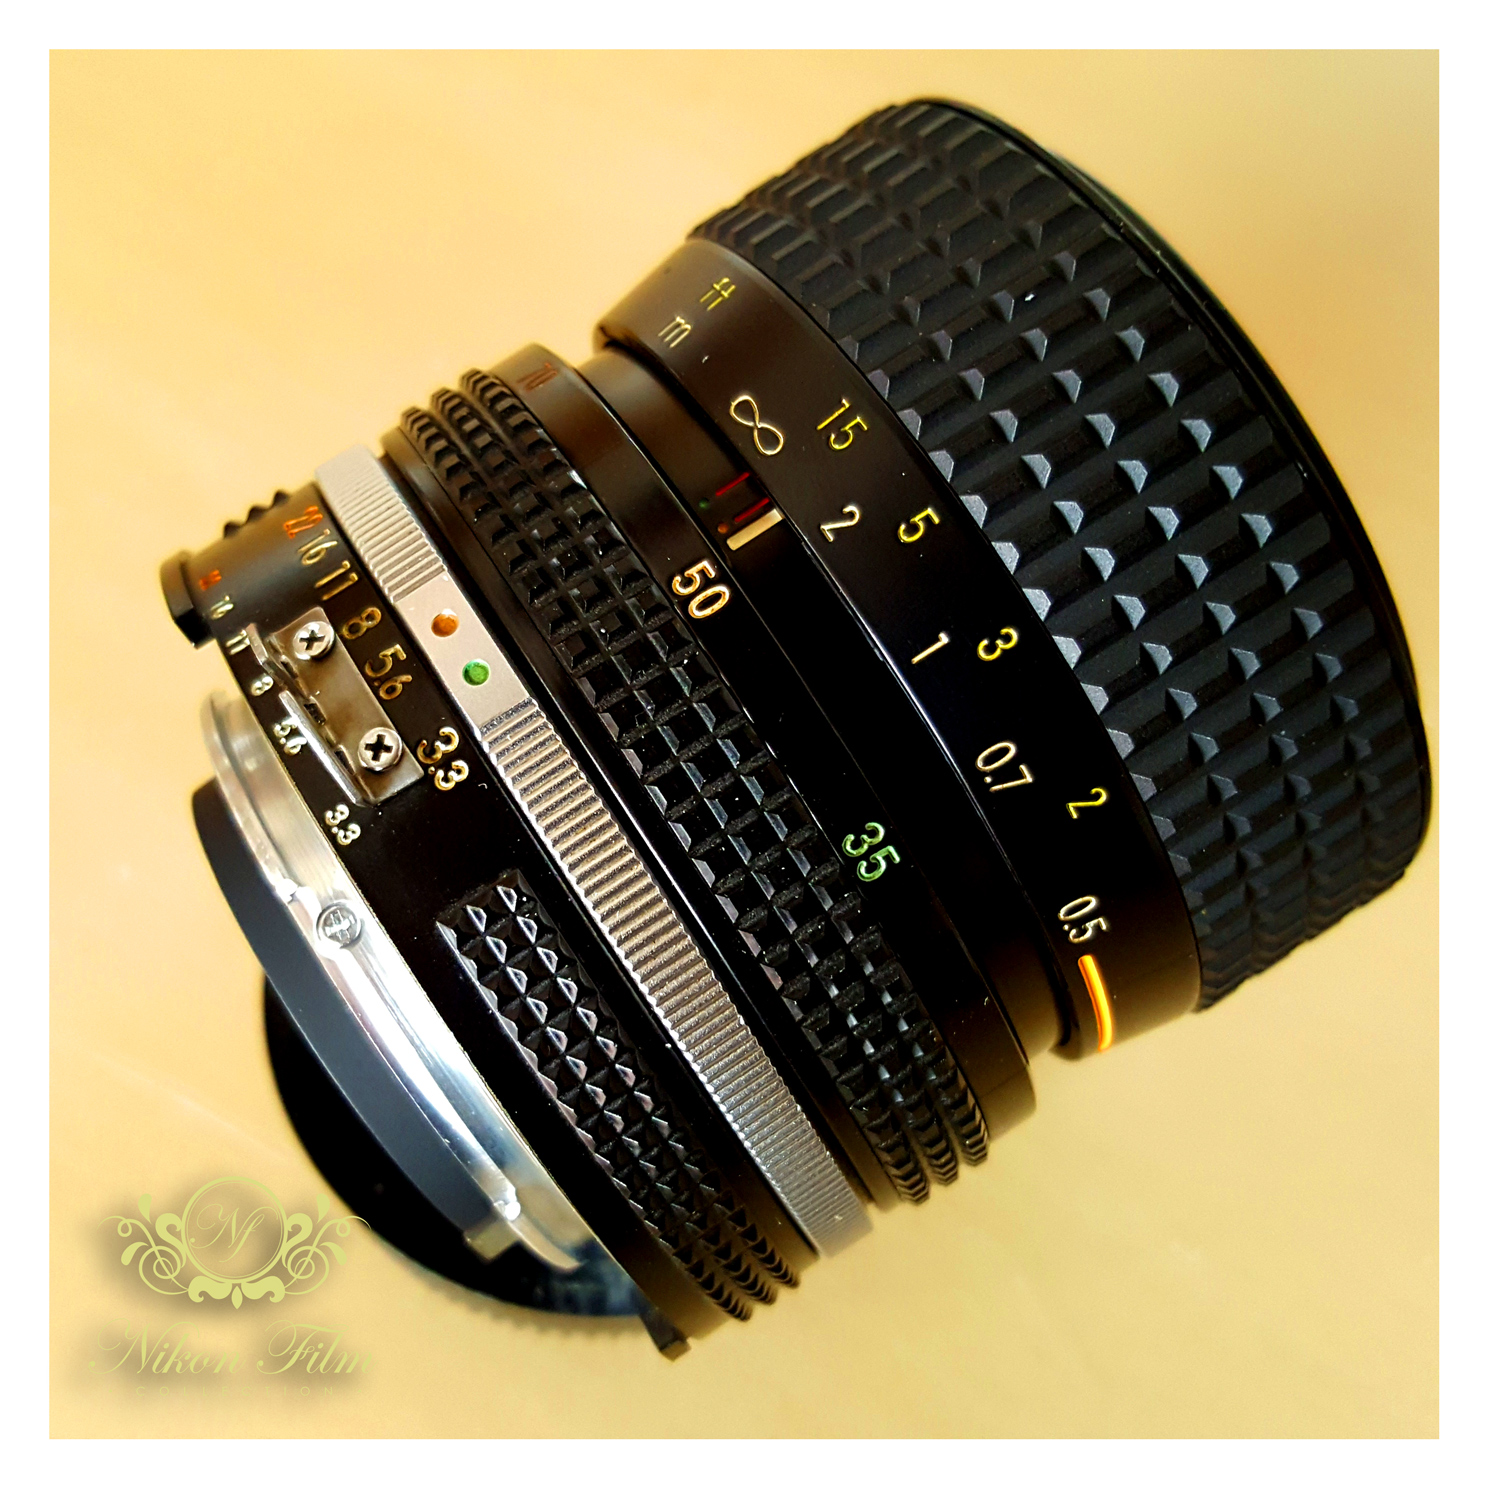 Nikon Zoom-Nikkor 35-70mm F/3.3-4.5 AiS - Boxed